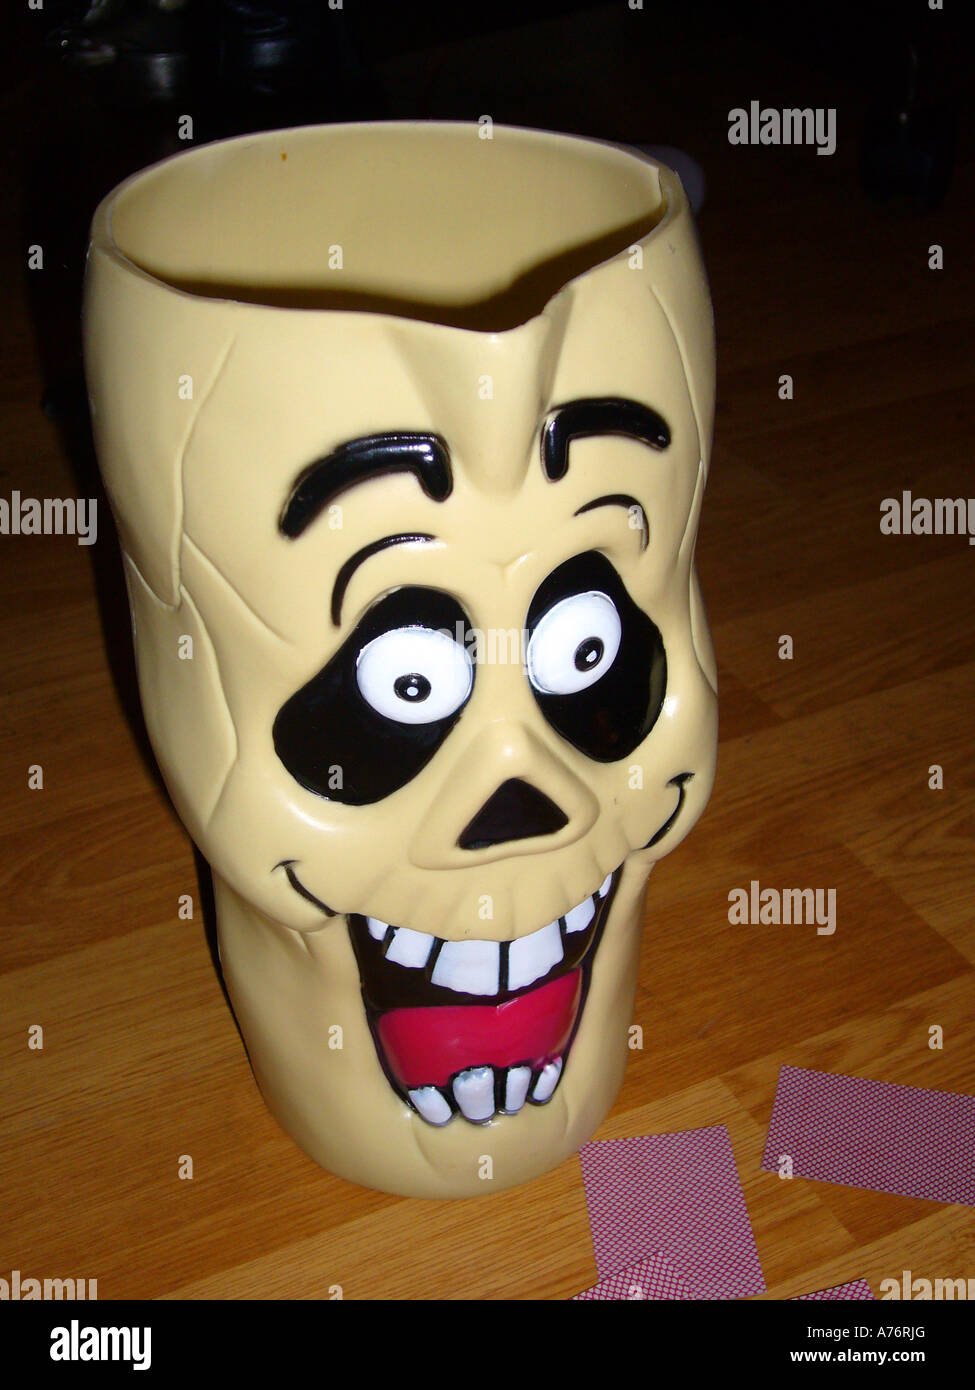 plastic halloween evil face jug Stock Photo - Alamy